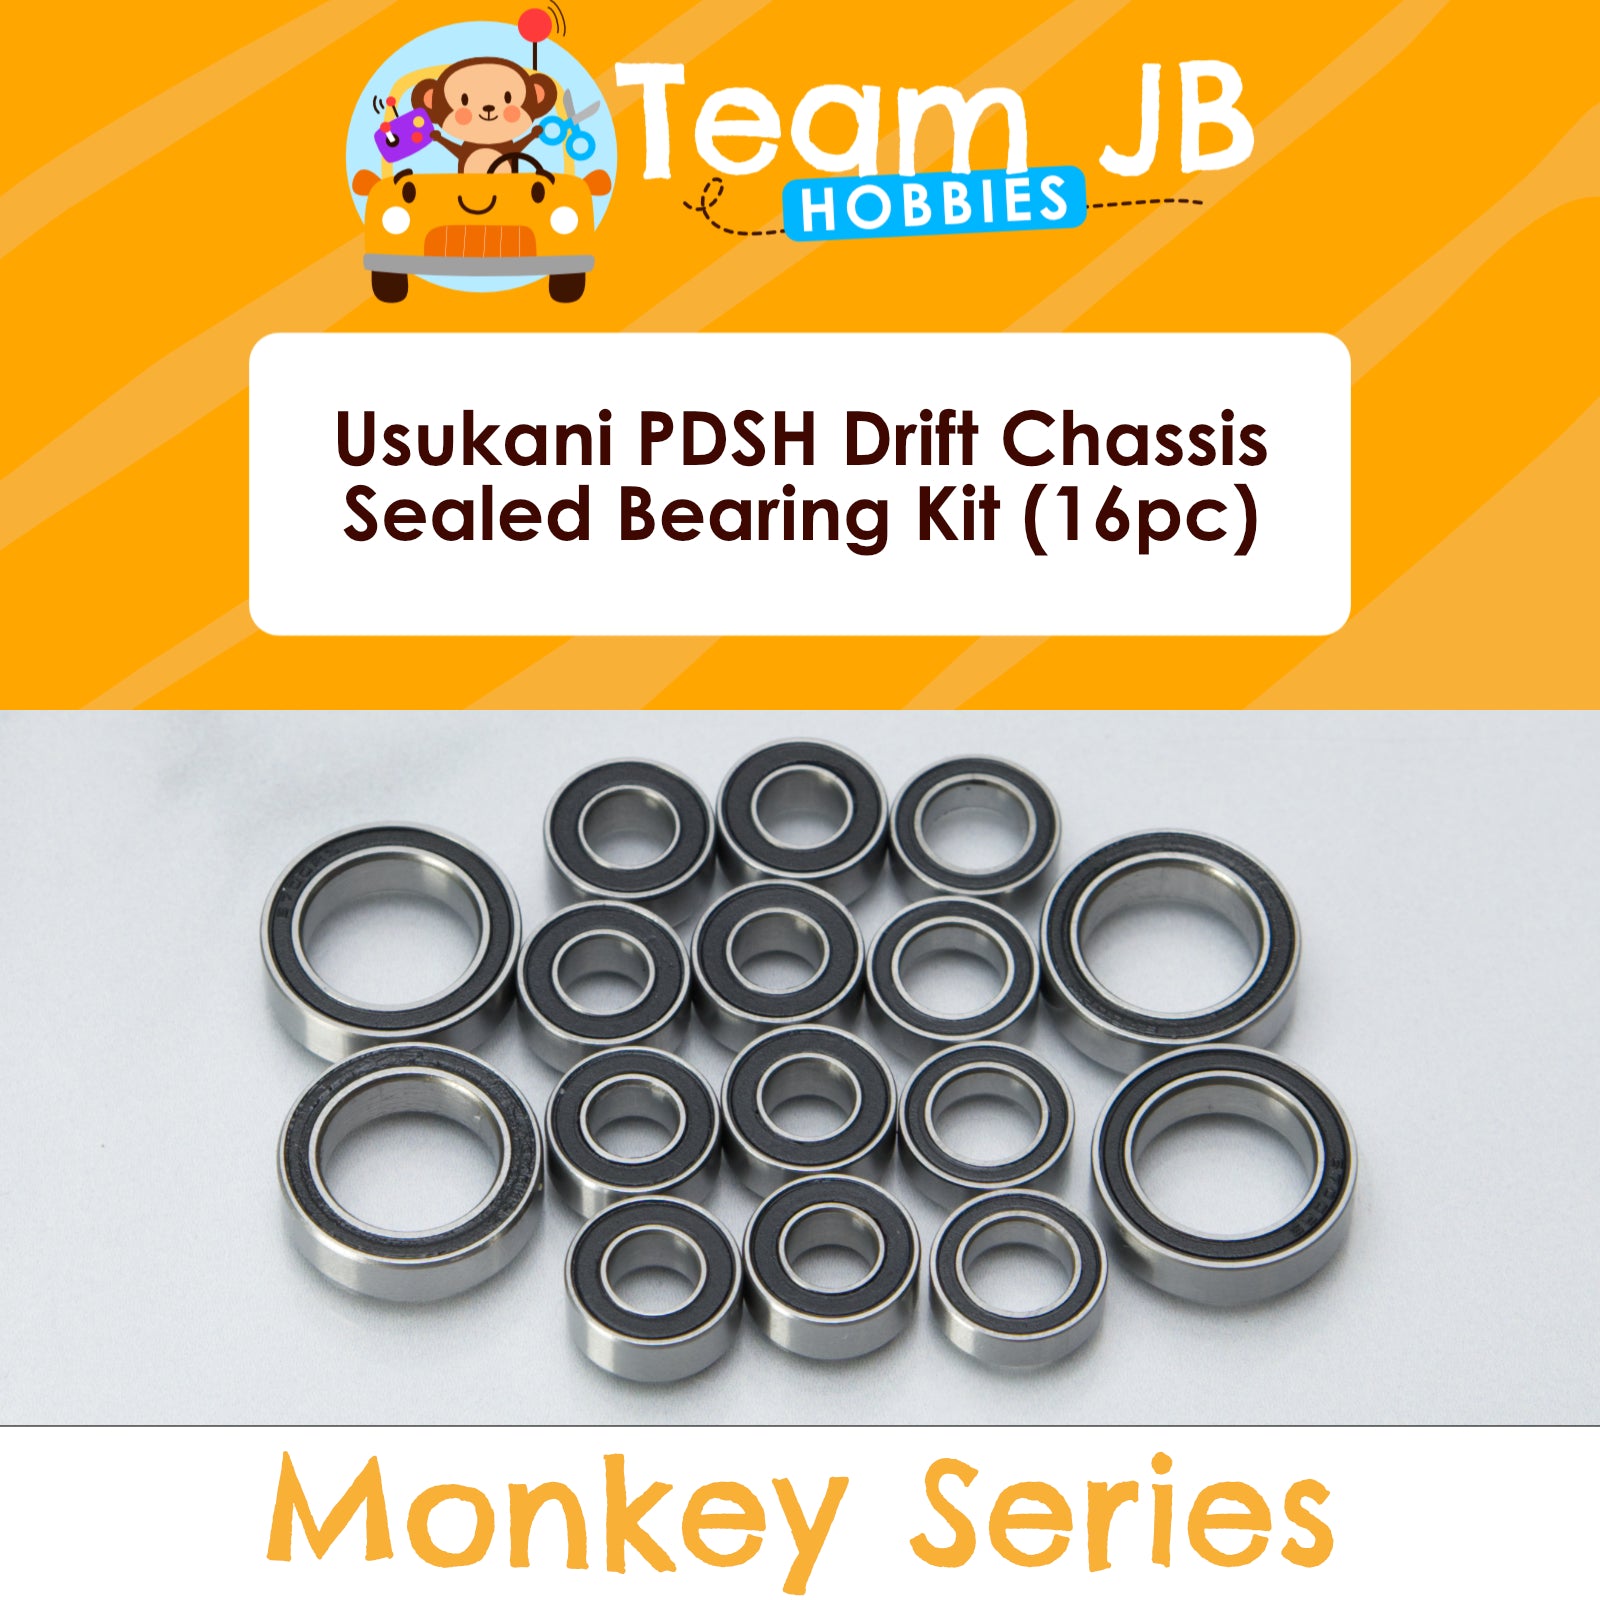 Usukani PDSH Drift Chassis - Sealed Bearing Kit